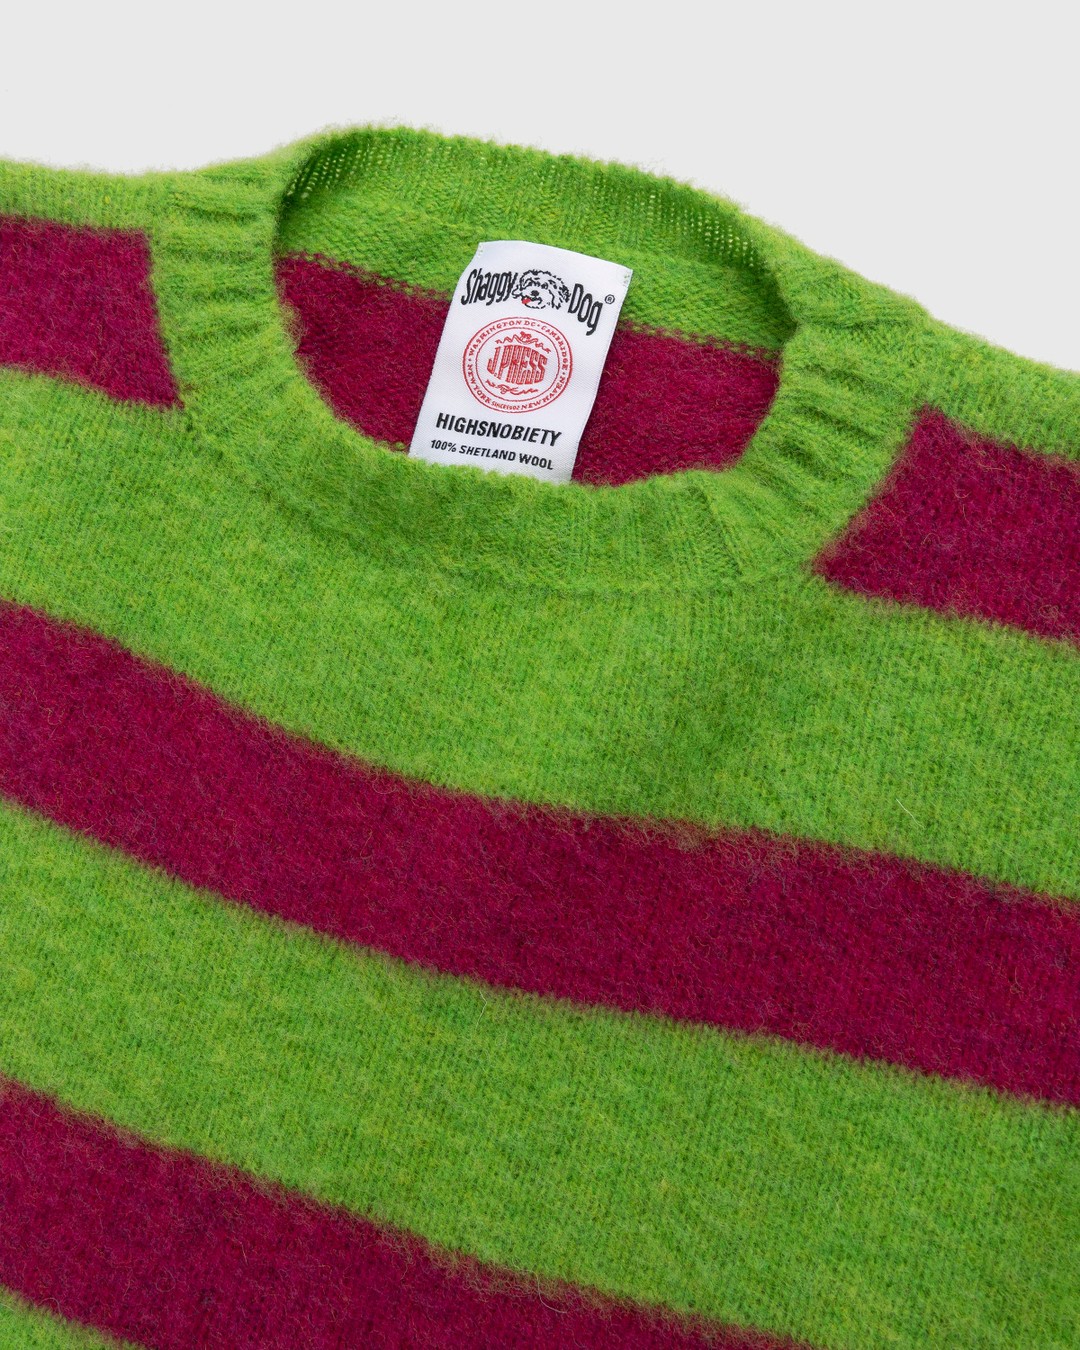 J. Press x Highsnobiety – Shaggy Dog Stripe Sweater Multi - Crewnecks - Multi - Image 3